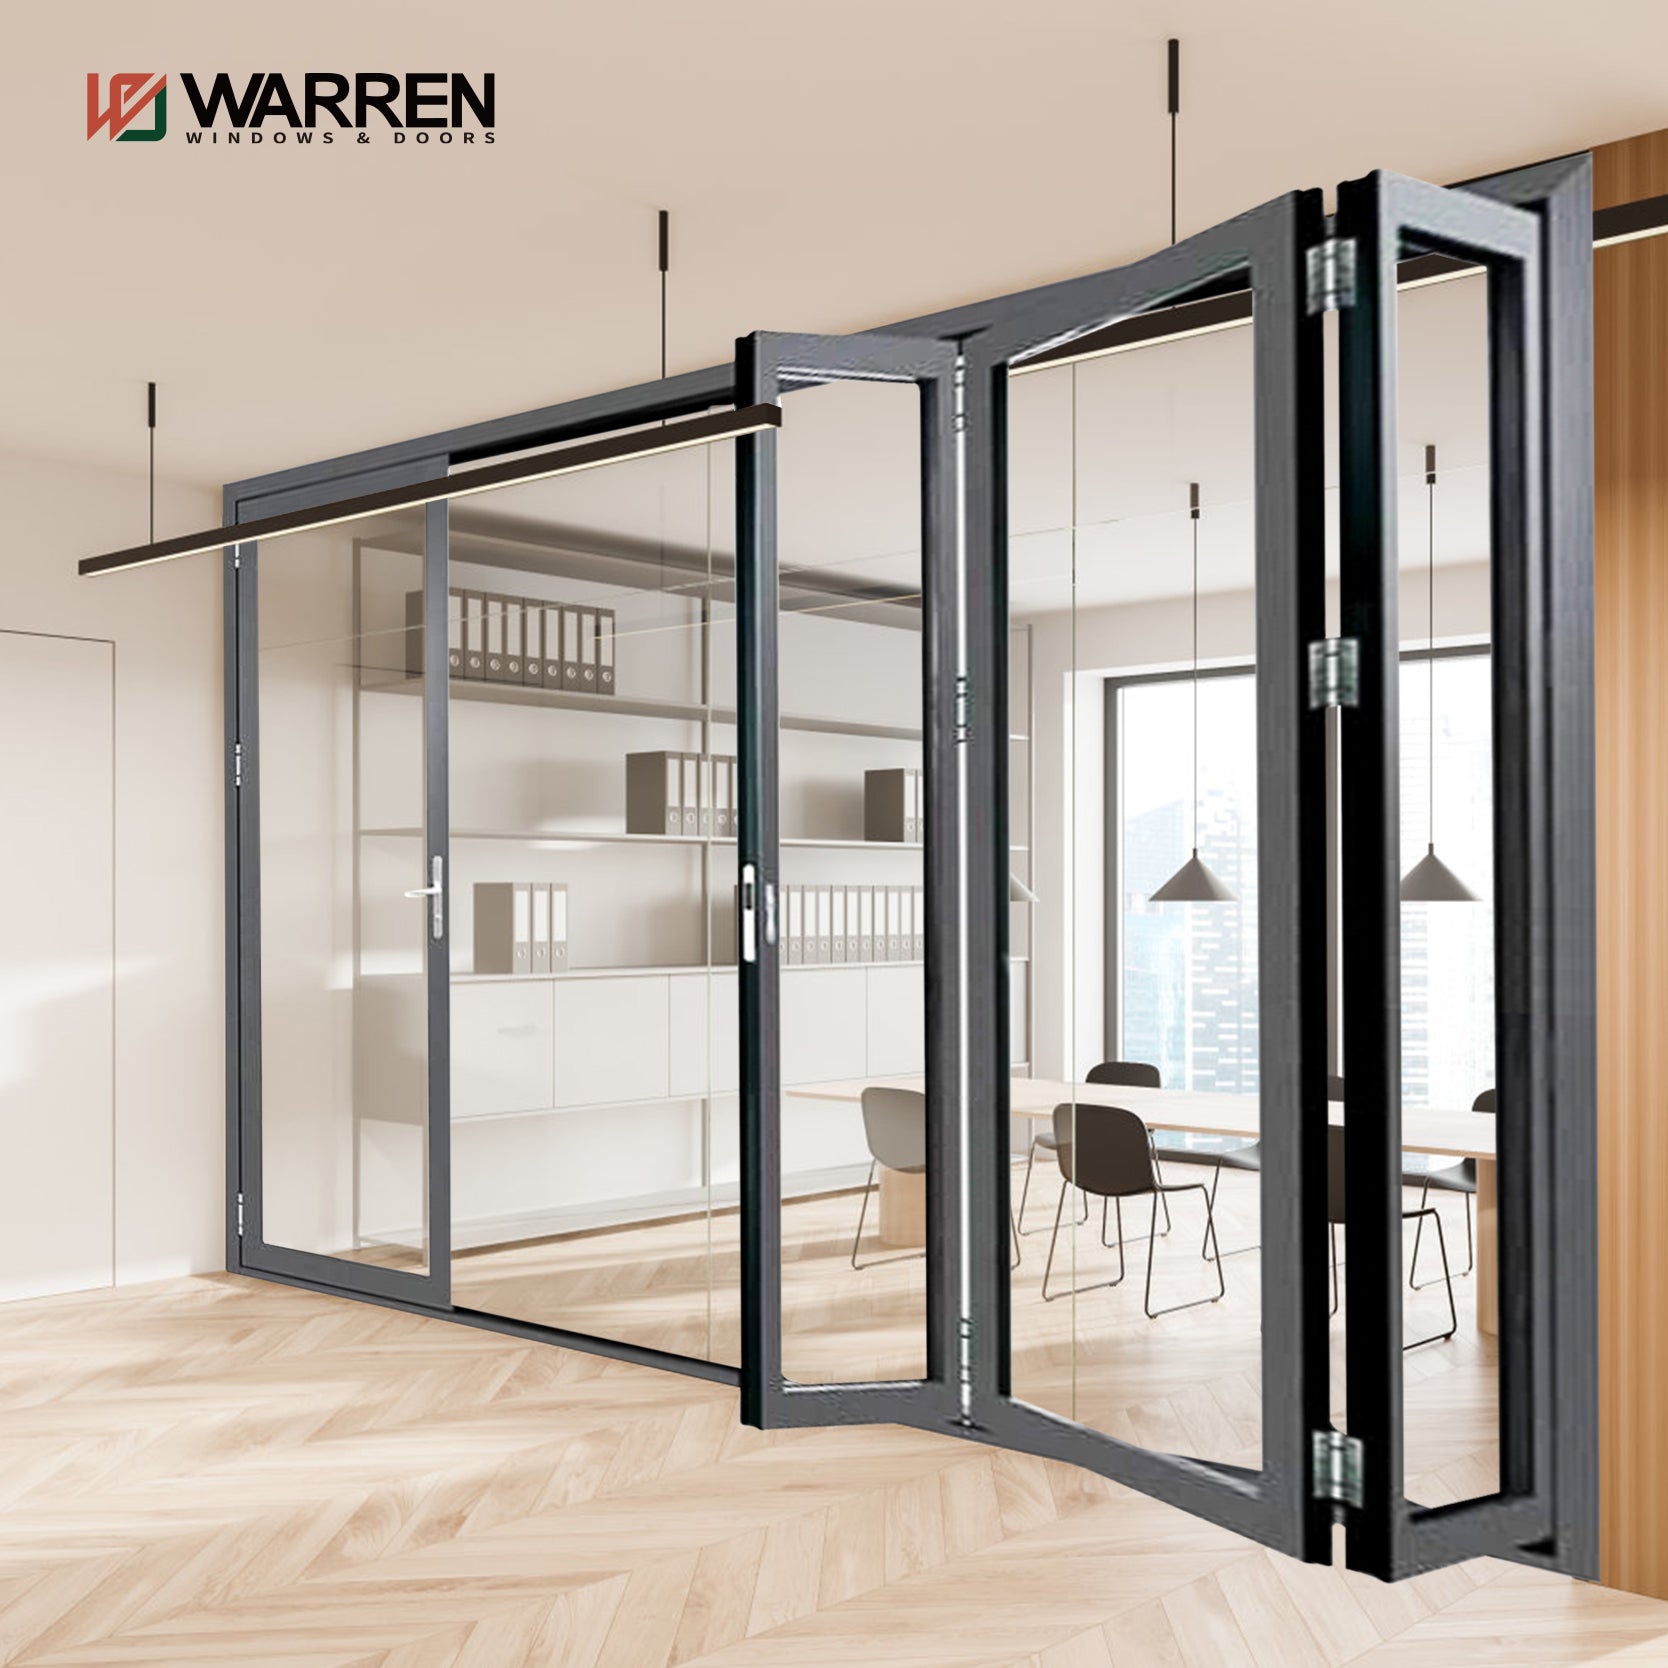 Warren China Wholesale Security Aluminium Door Entry Exterior Metal Doors Aluminium Bi-Fold Door